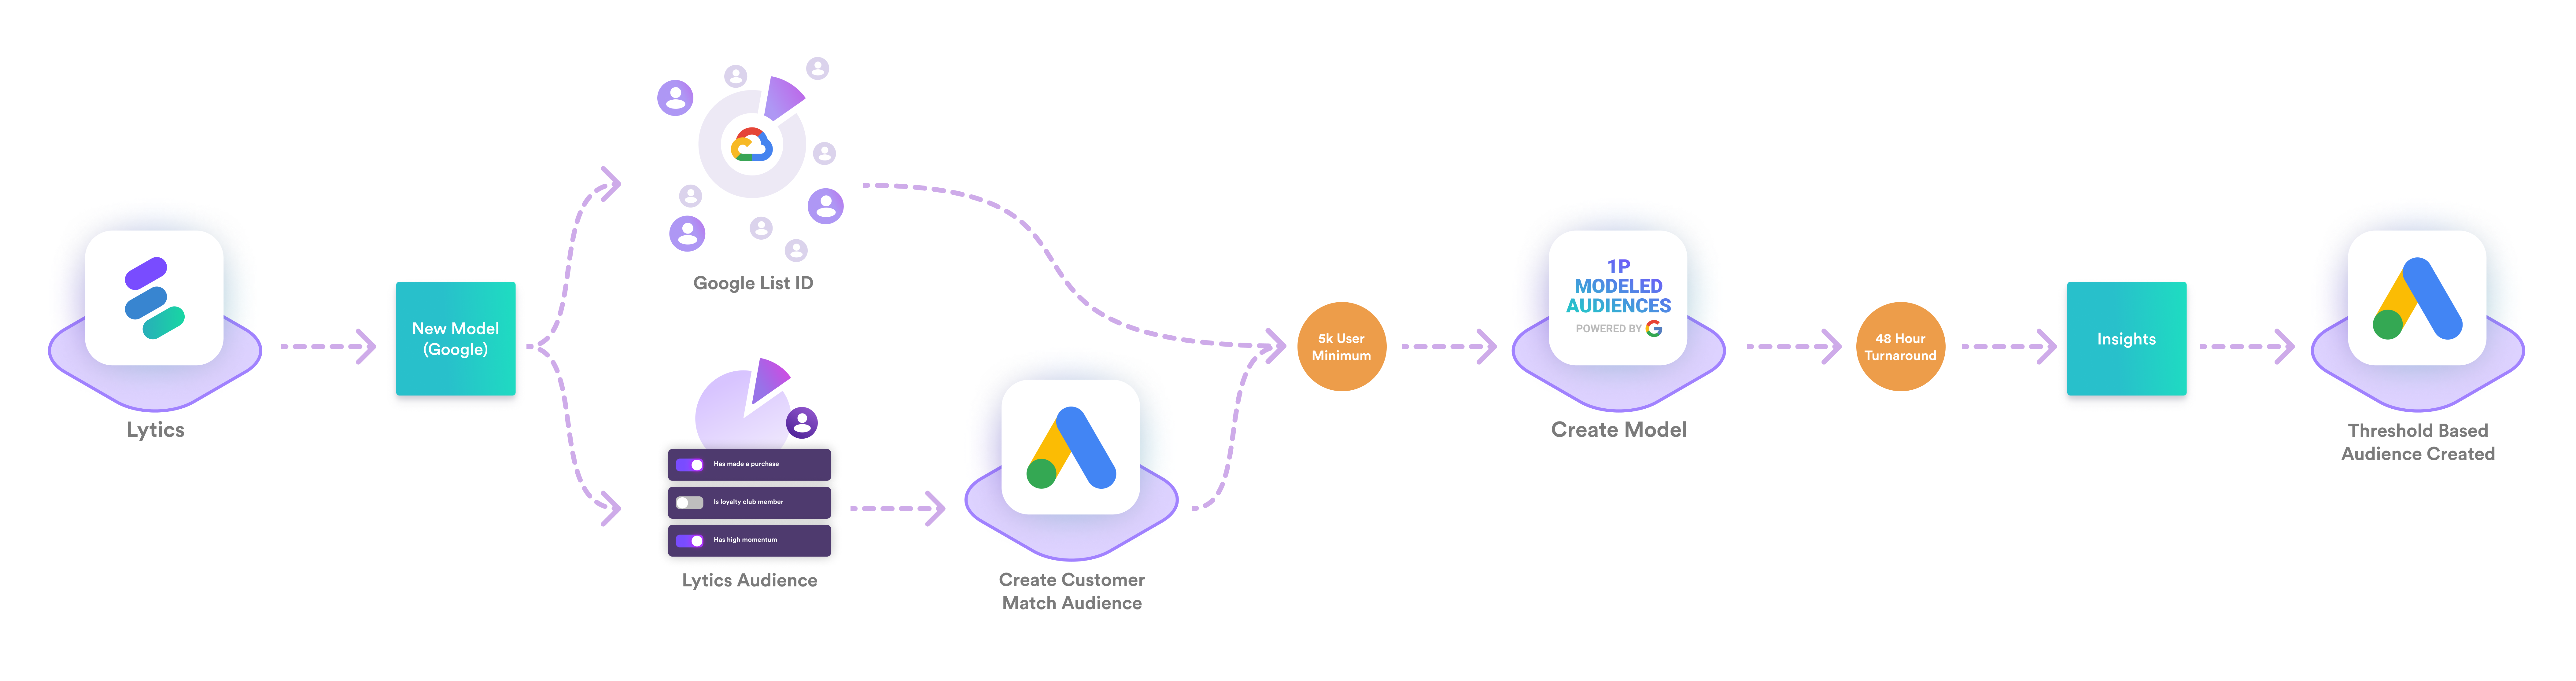 Google Modeled Audiences Data Flow